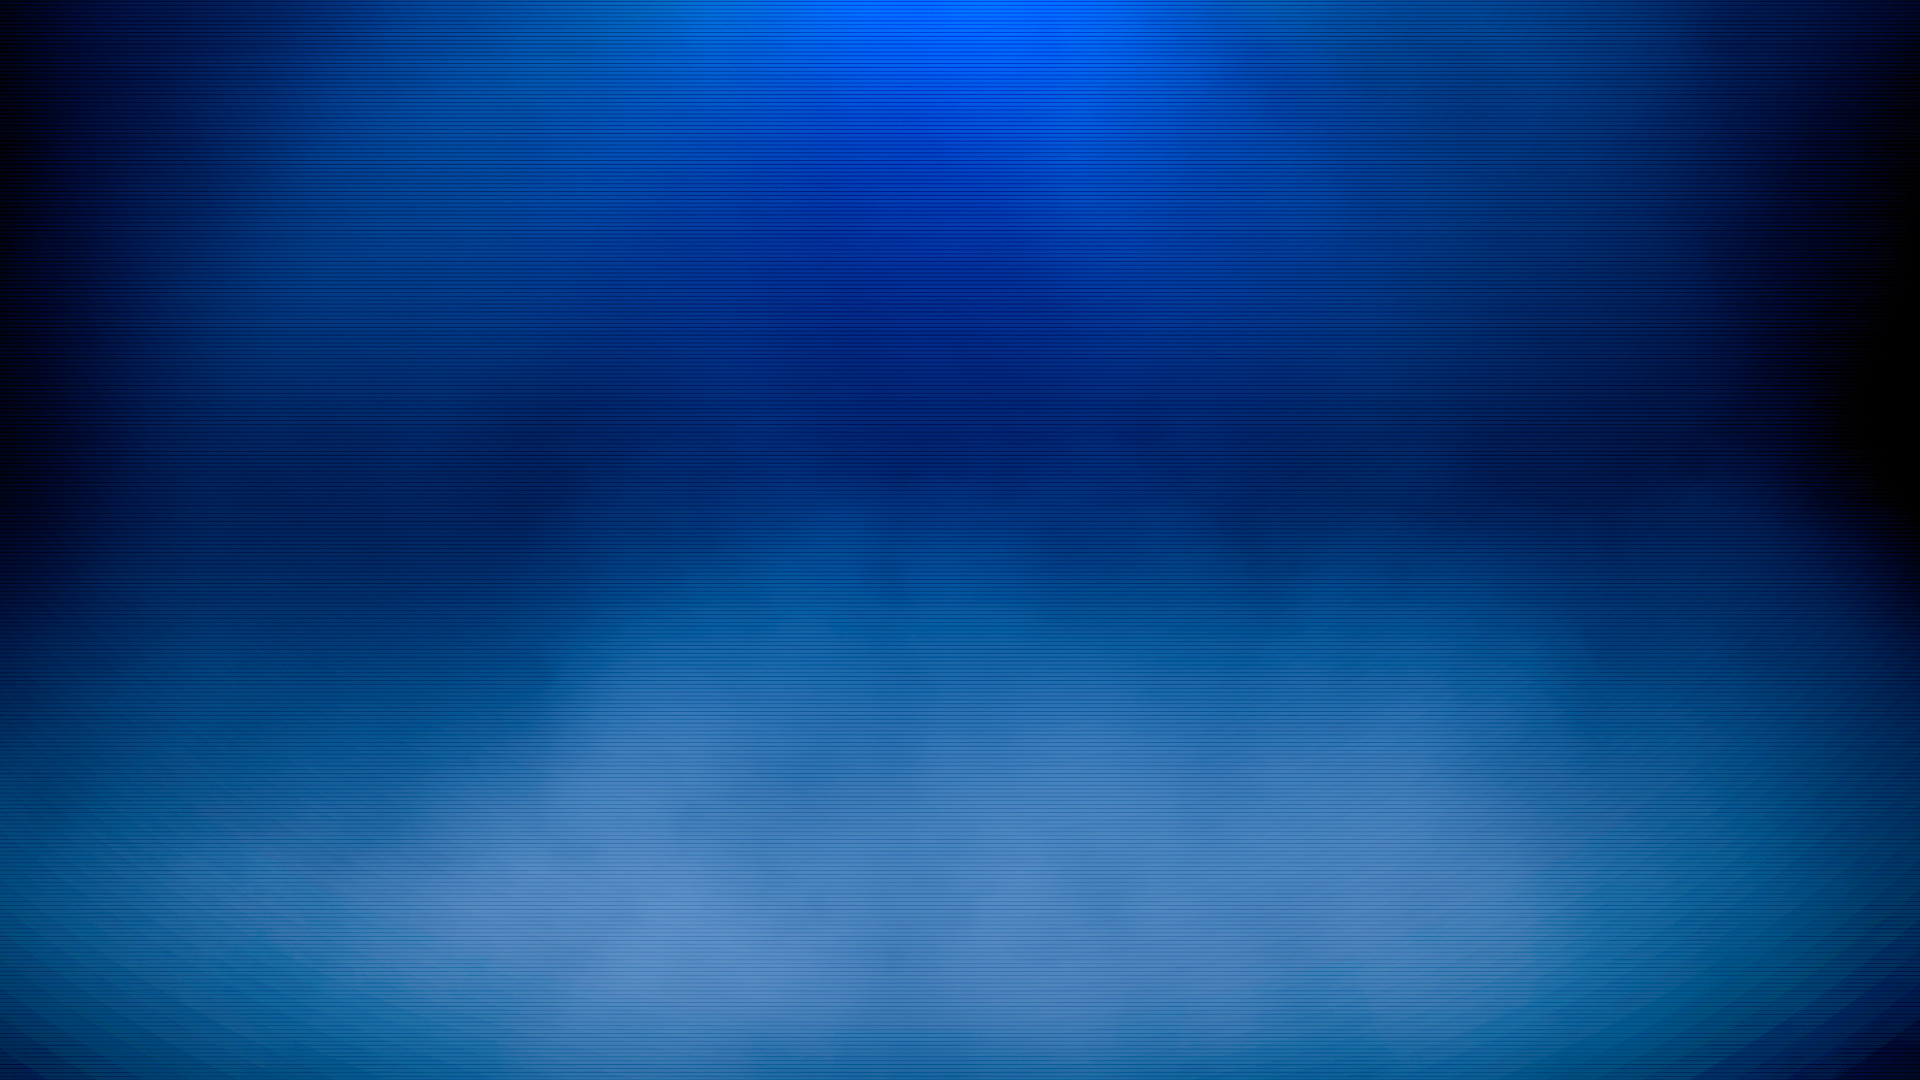 blue mist texture